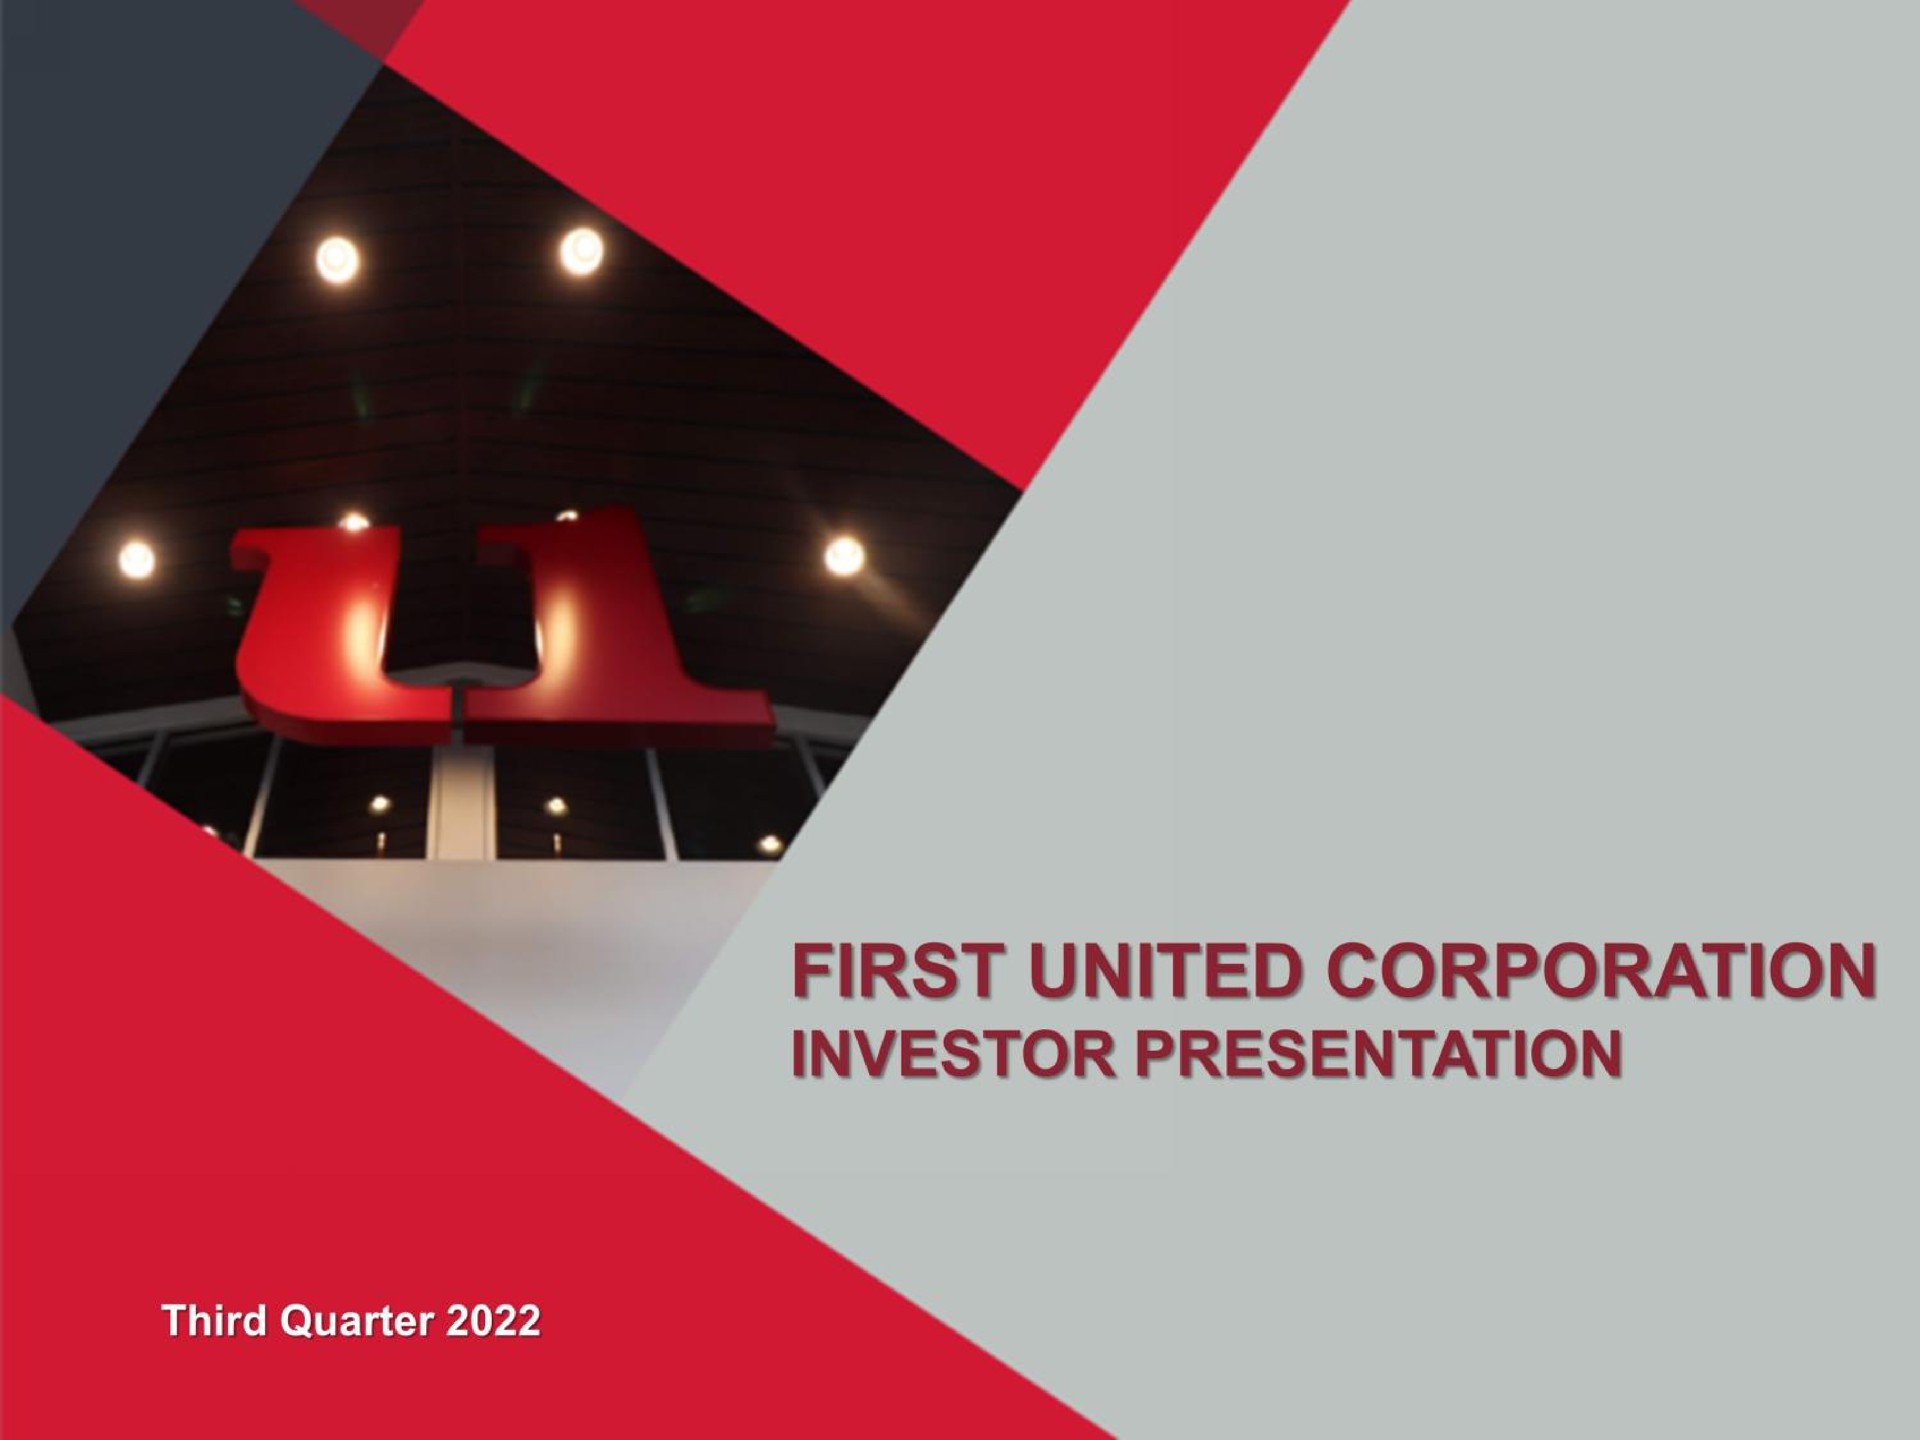 first united corporation investor presentation | First United Corporation